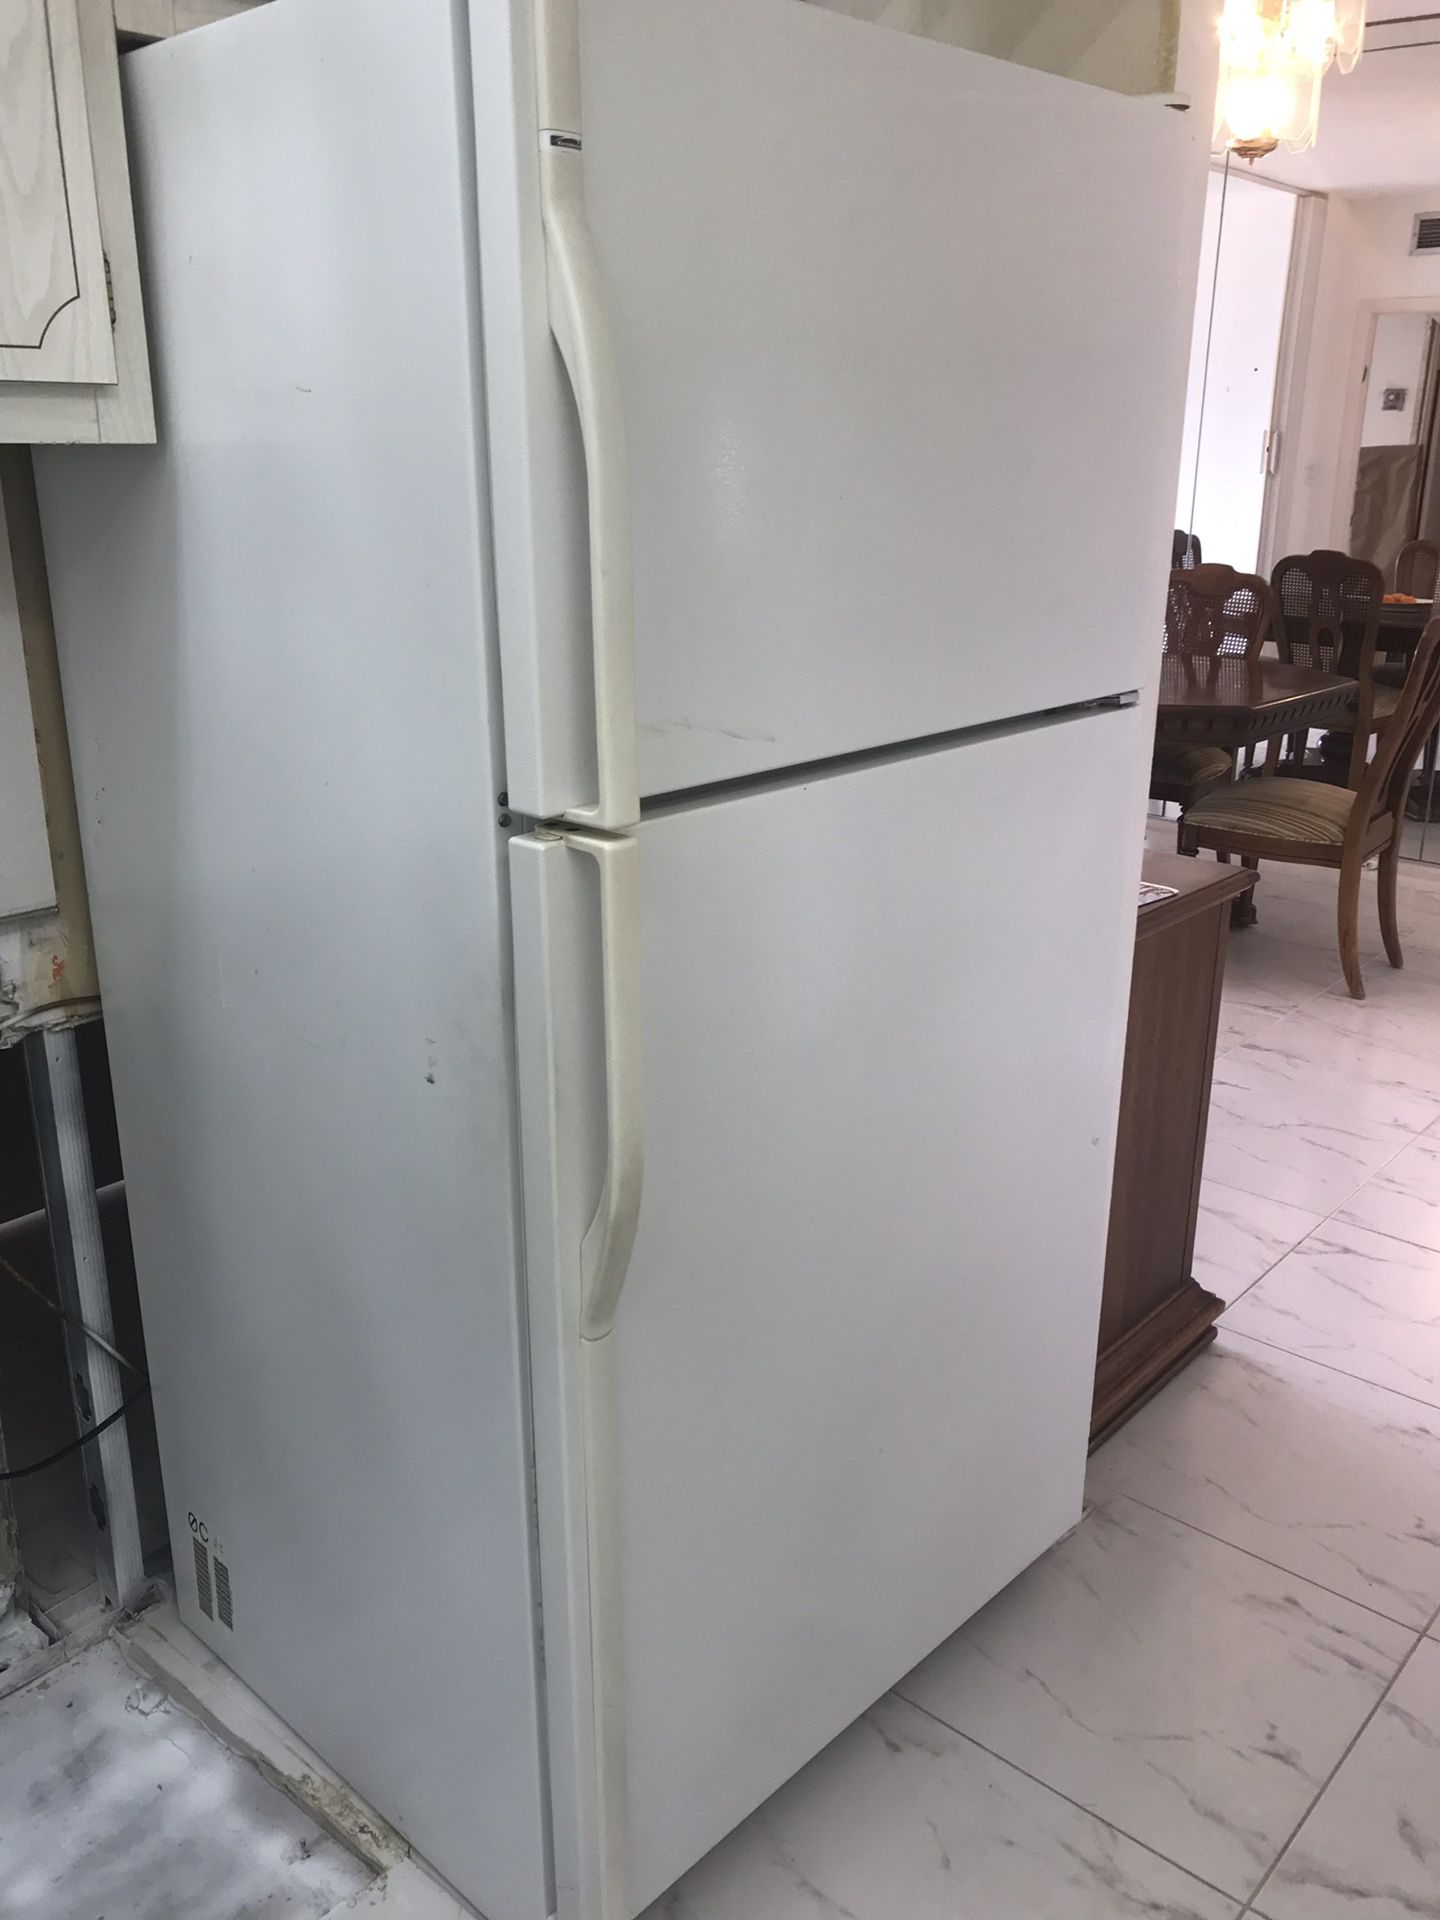 Kitchen appliances, fridge, dishwasher and microwave